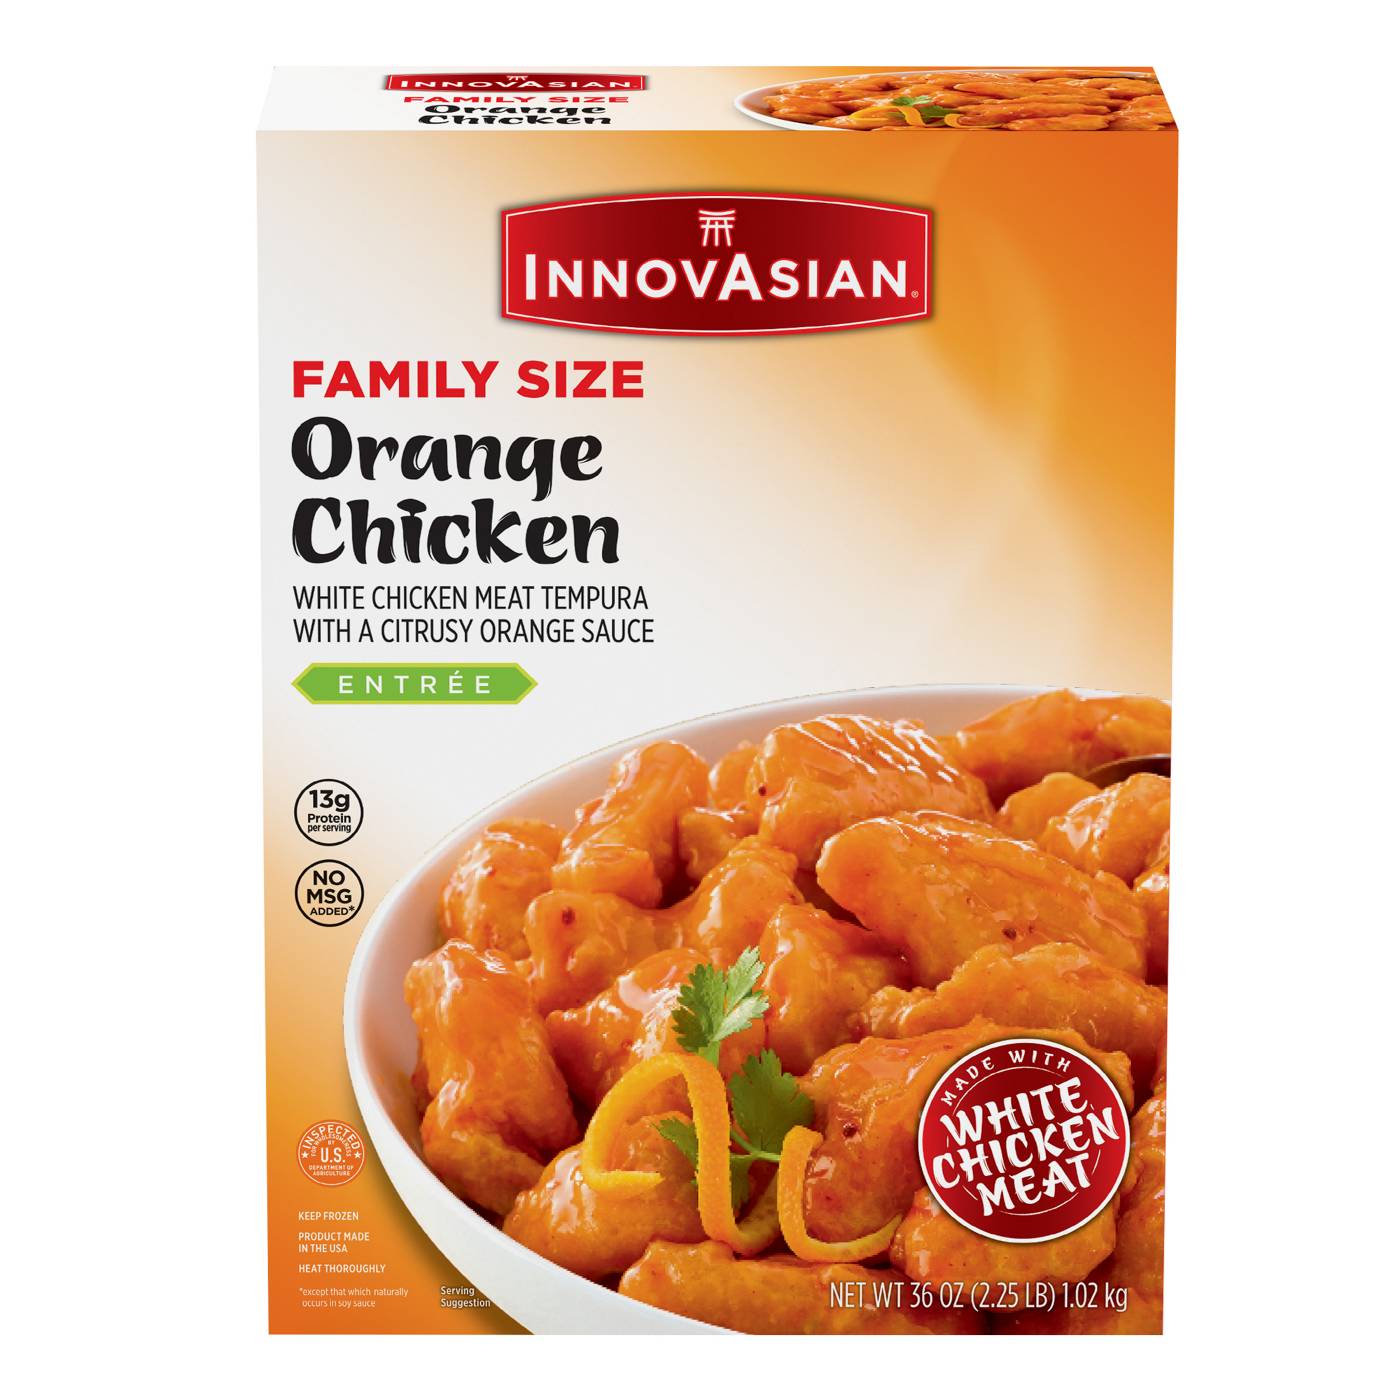 InnovAsian Frozen Orange Chicken - Family-Size; image 1 of 9